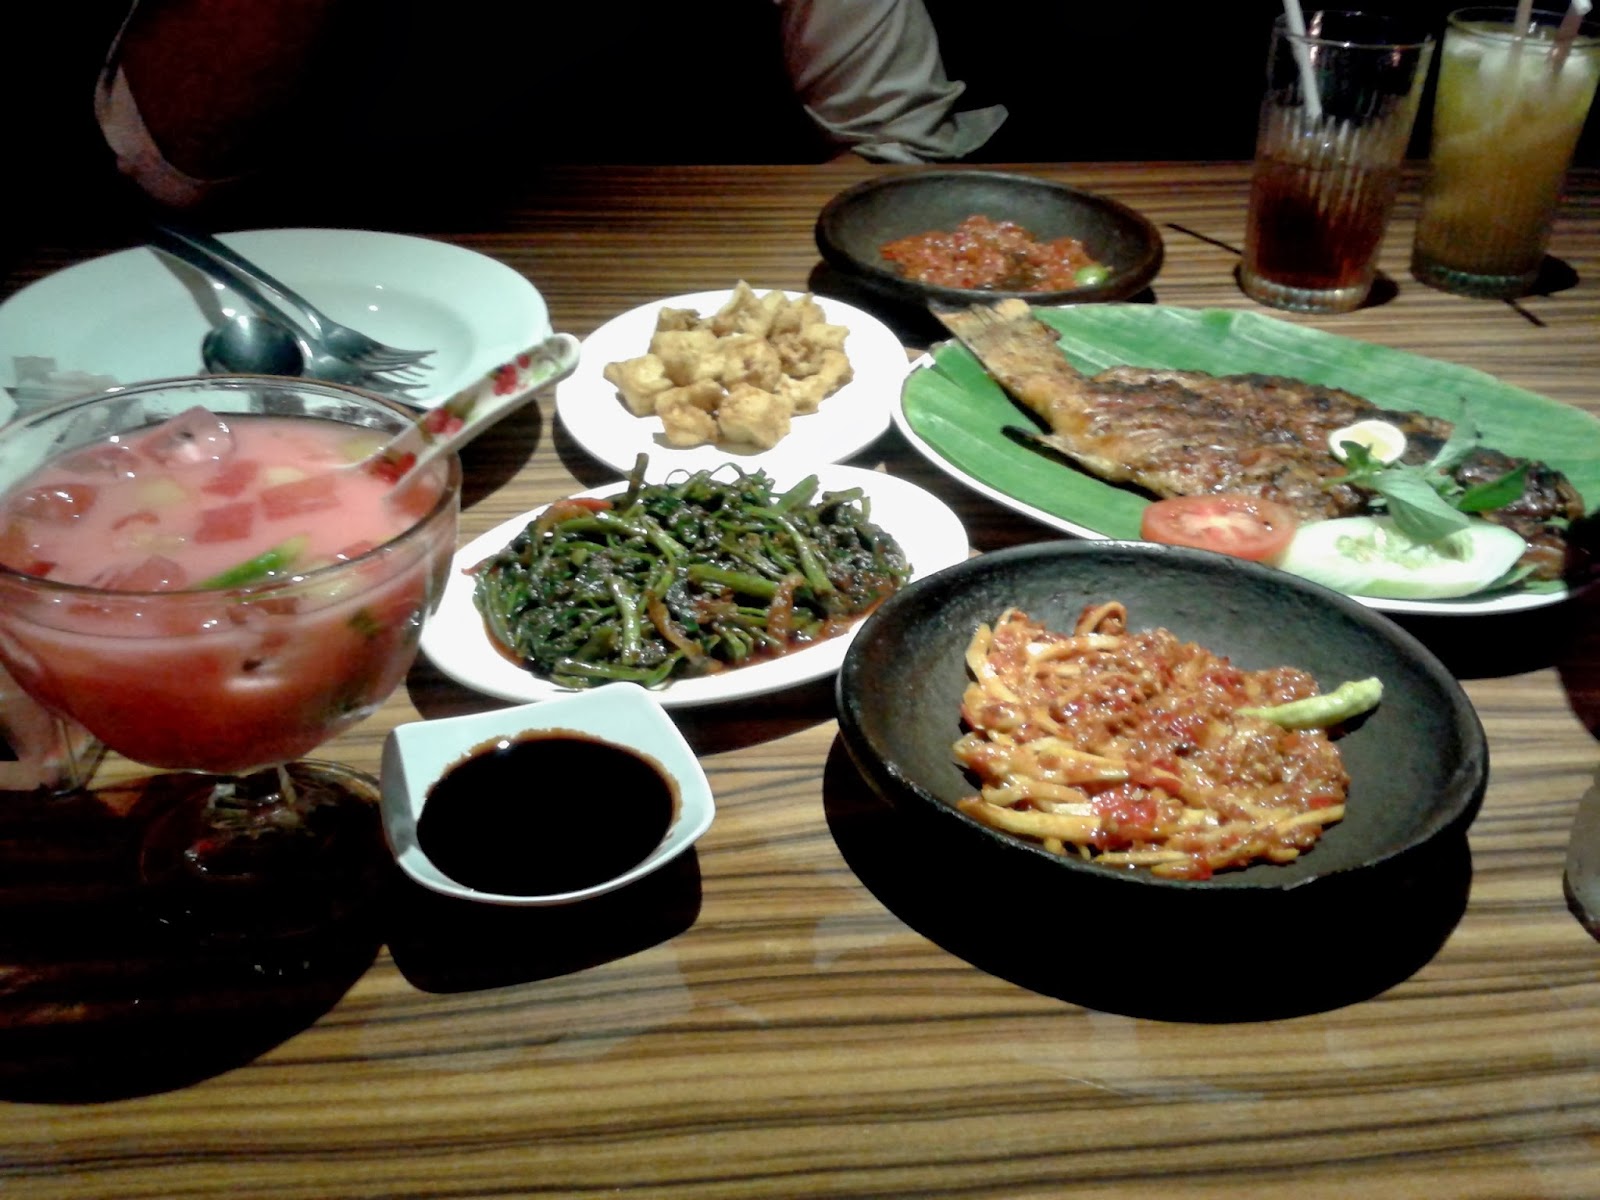 Tempat makan Romantis di Surabaya "Bandar Sari Laut 